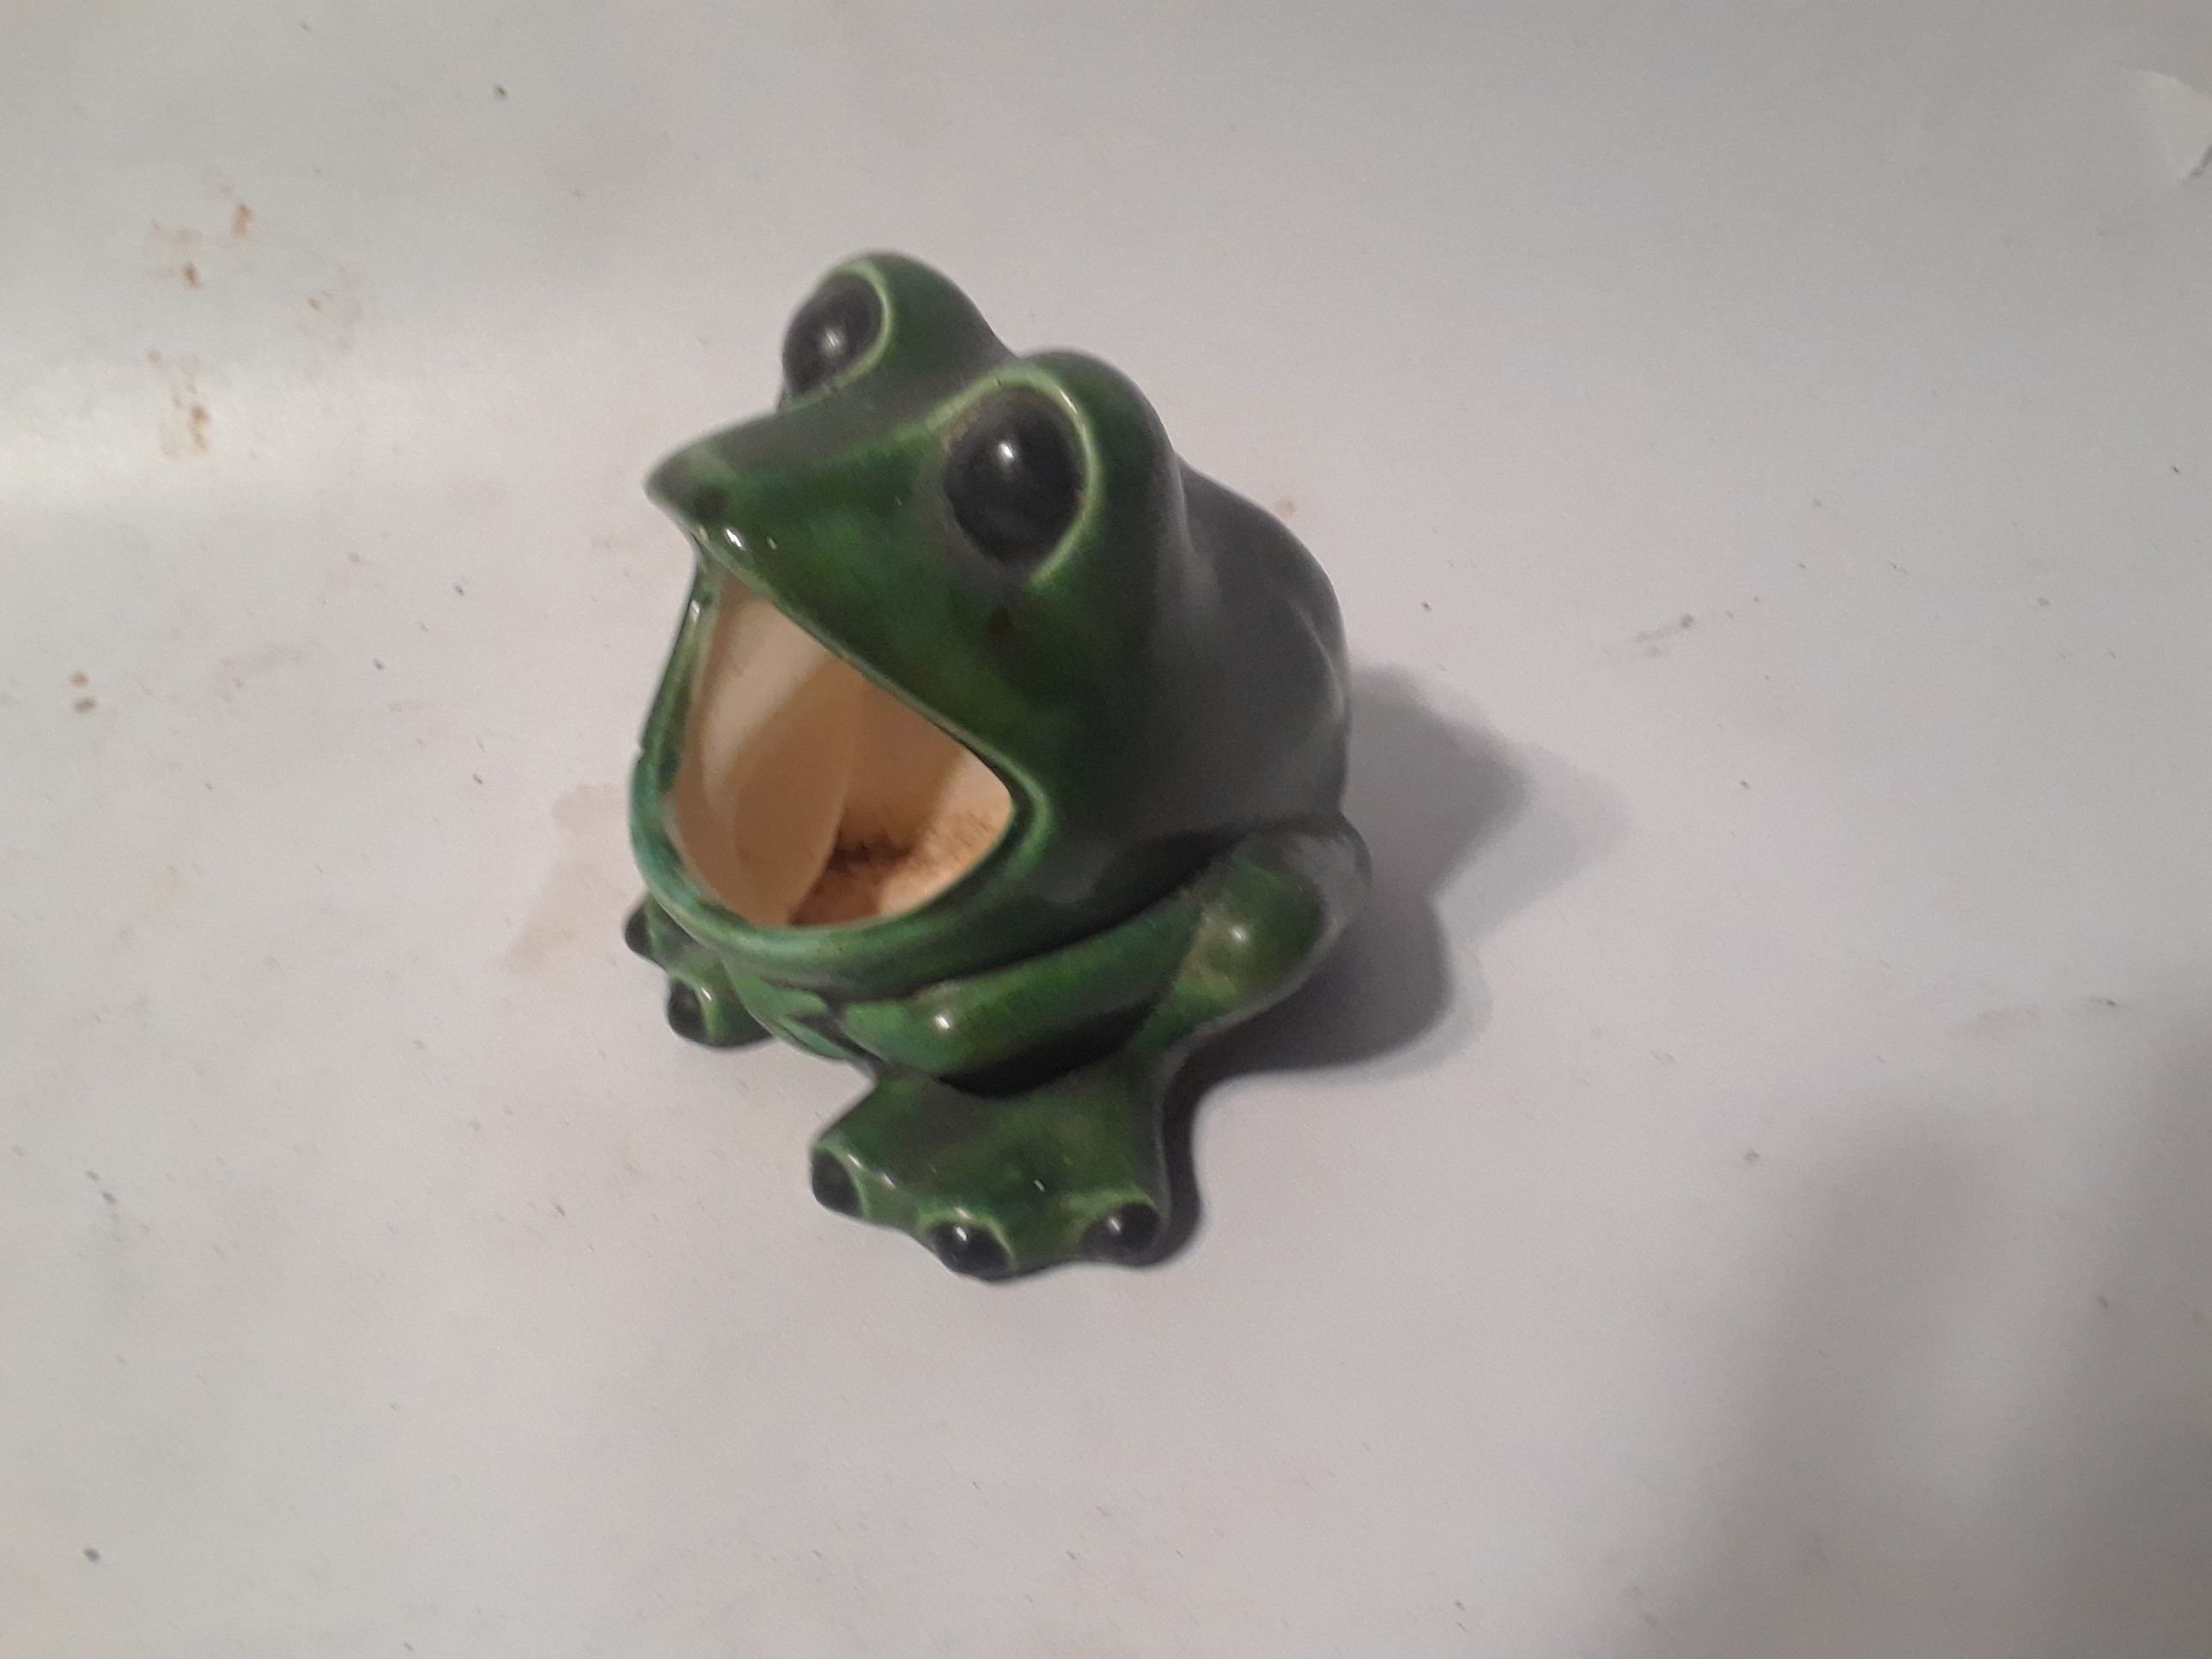 Green frog statute decor